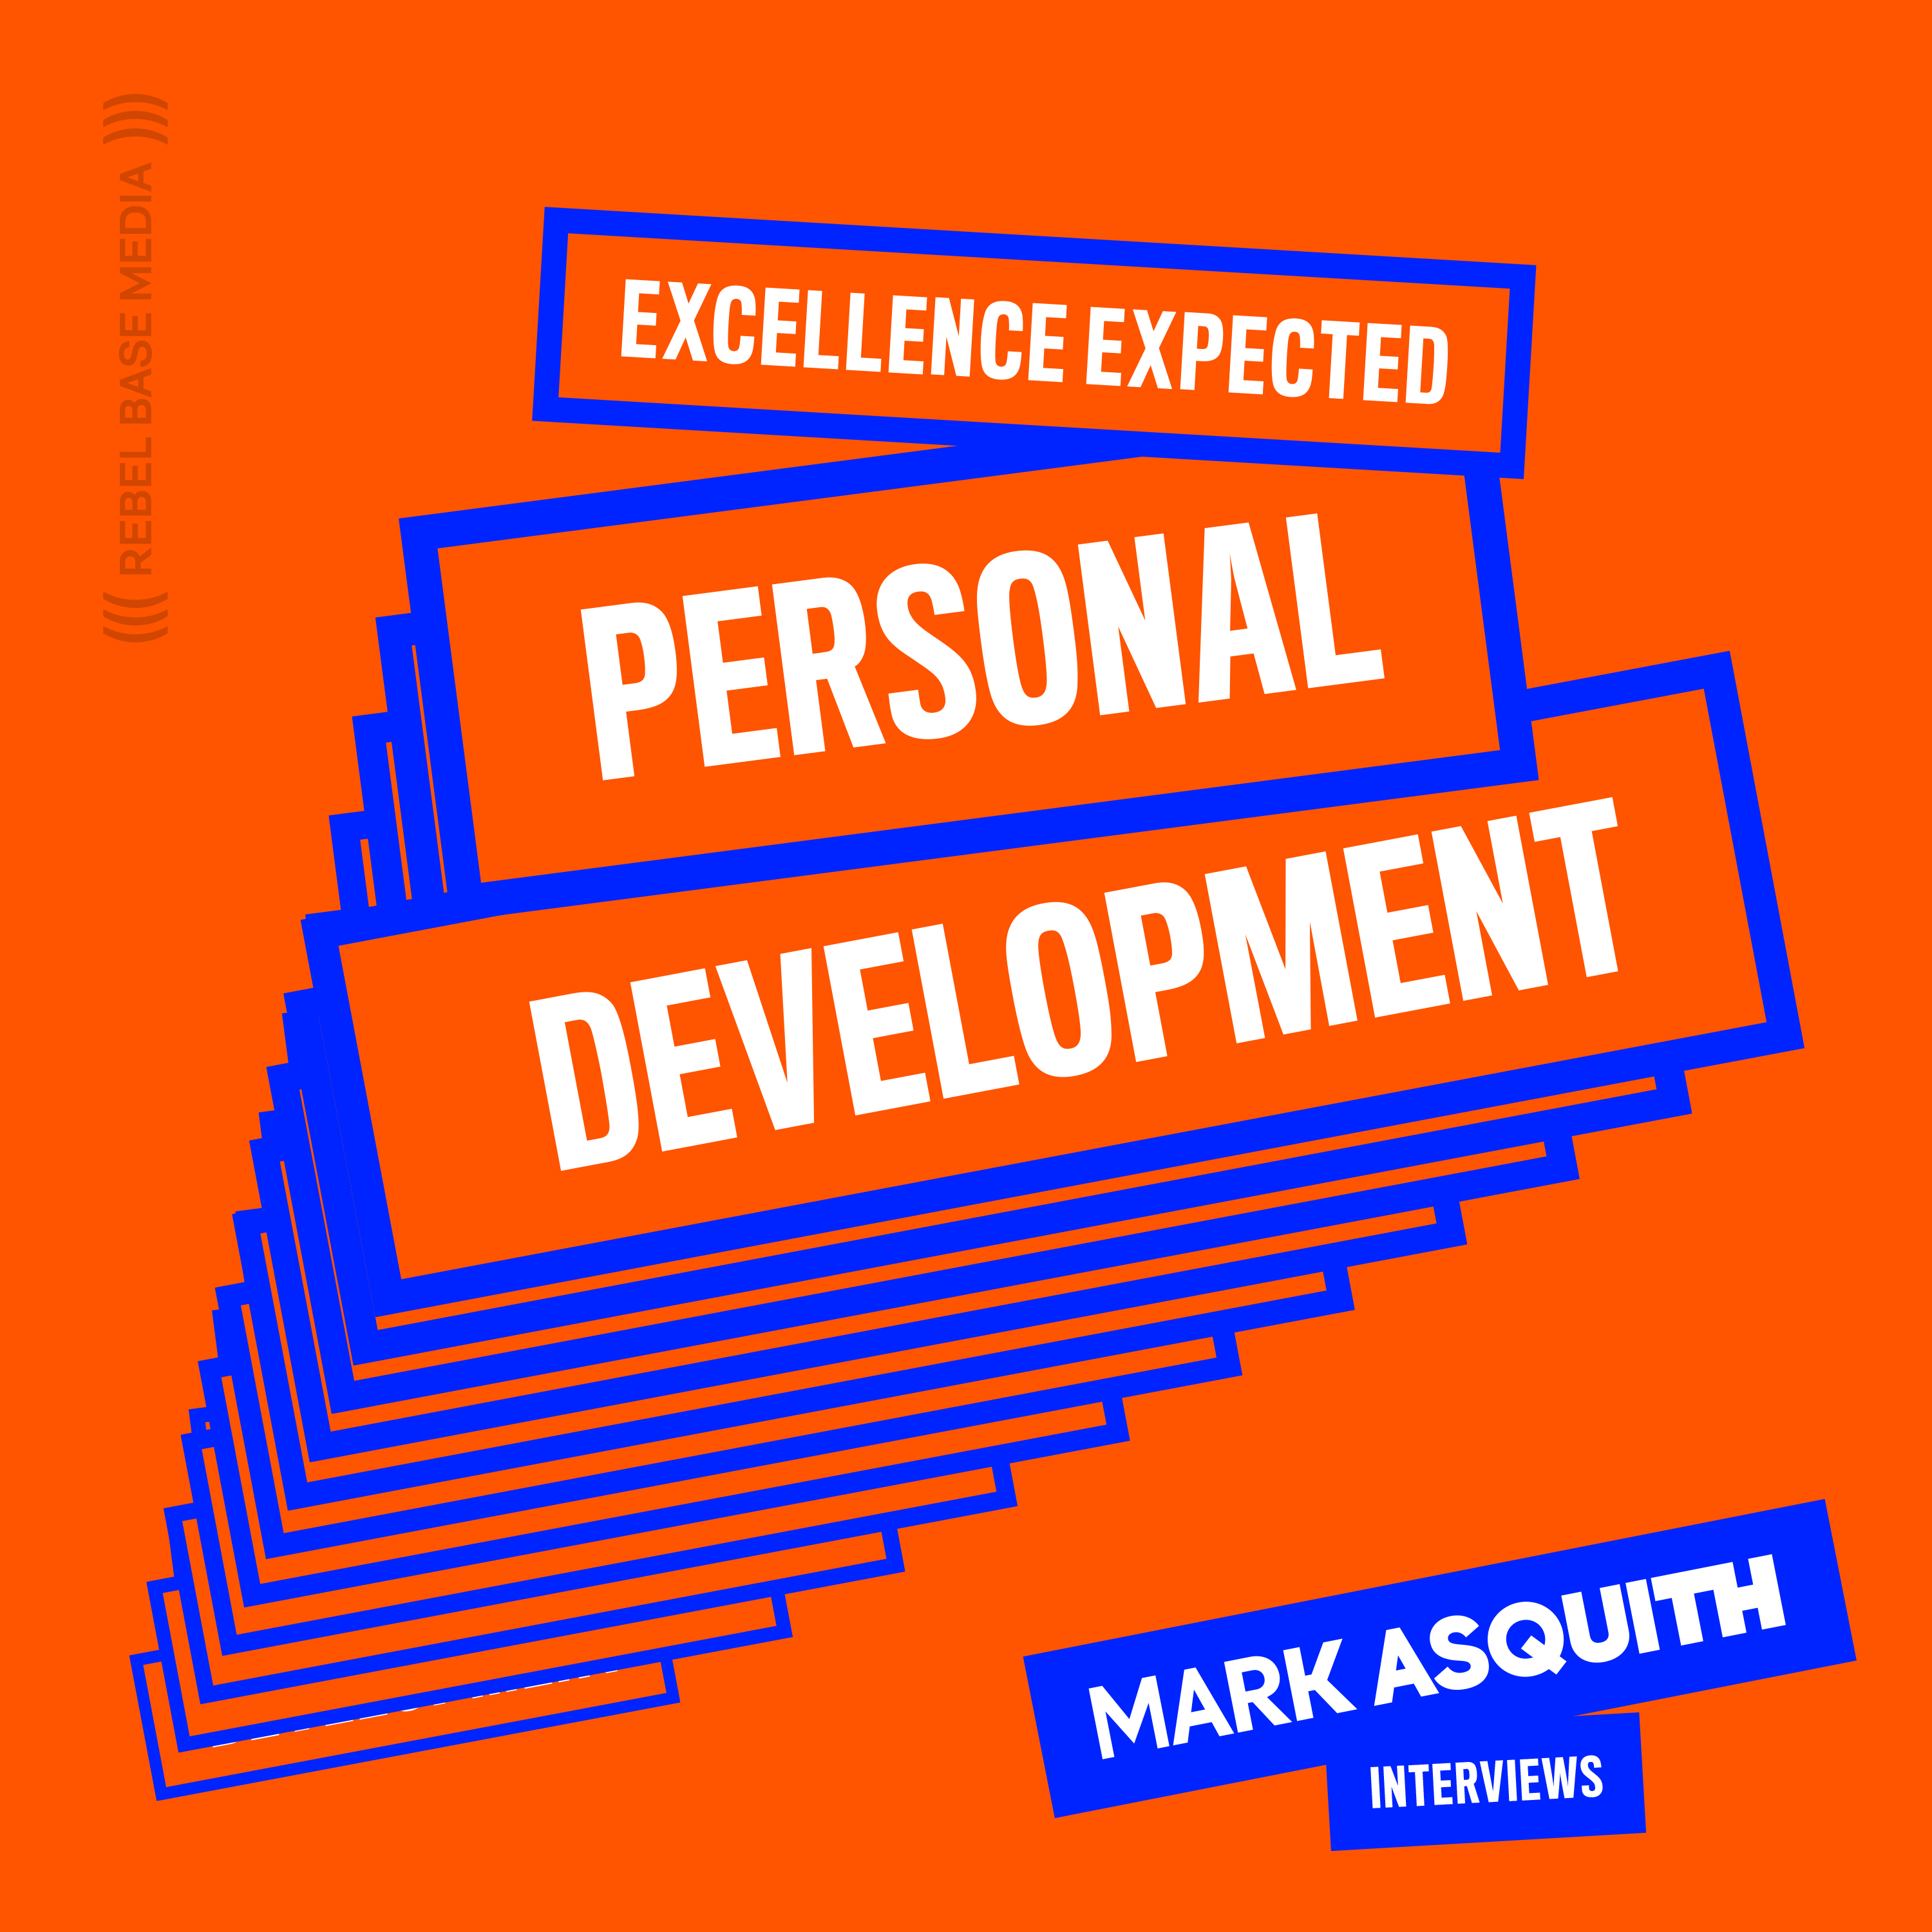 Personal Development - Mark Asquith Interviews...